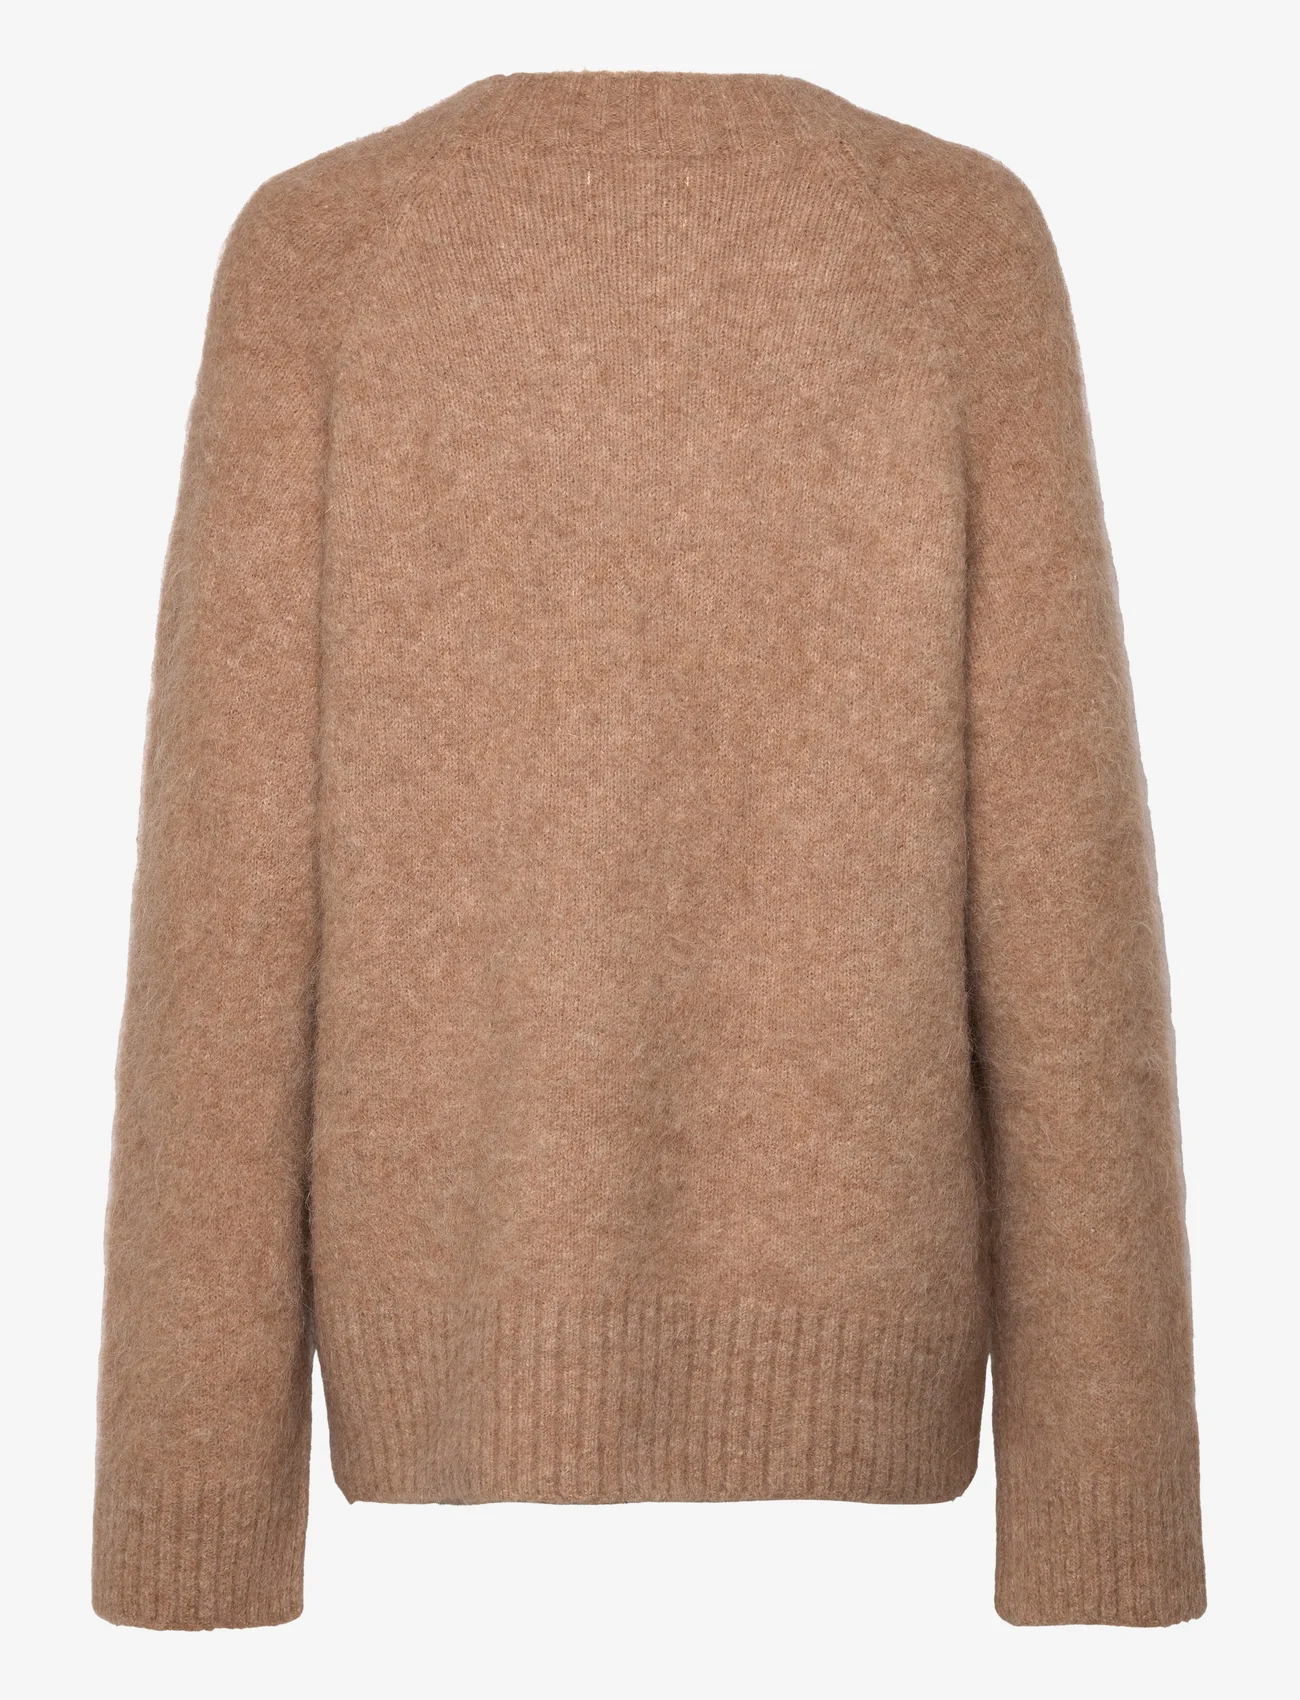 HOLZWEILER - Fure Fluffy Knit Sweater - džemperiai - beige - 1